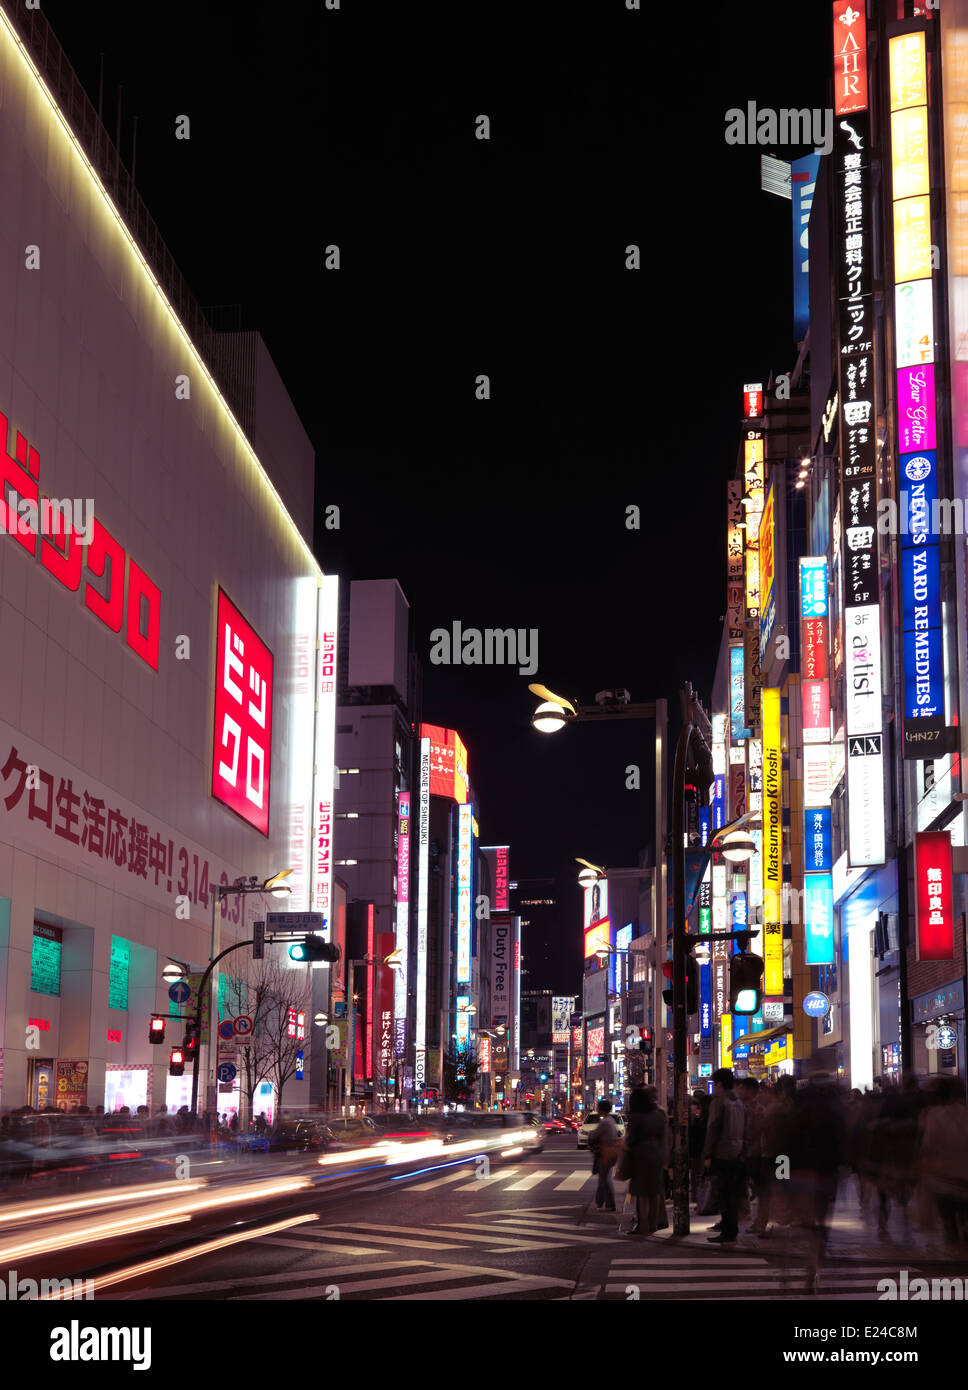 Magasin Uniqlo sur Shinjuku Dori. La nuit Tokyo ville. Shinjuku, Tokyo, Japon 2014. Banque D'Images